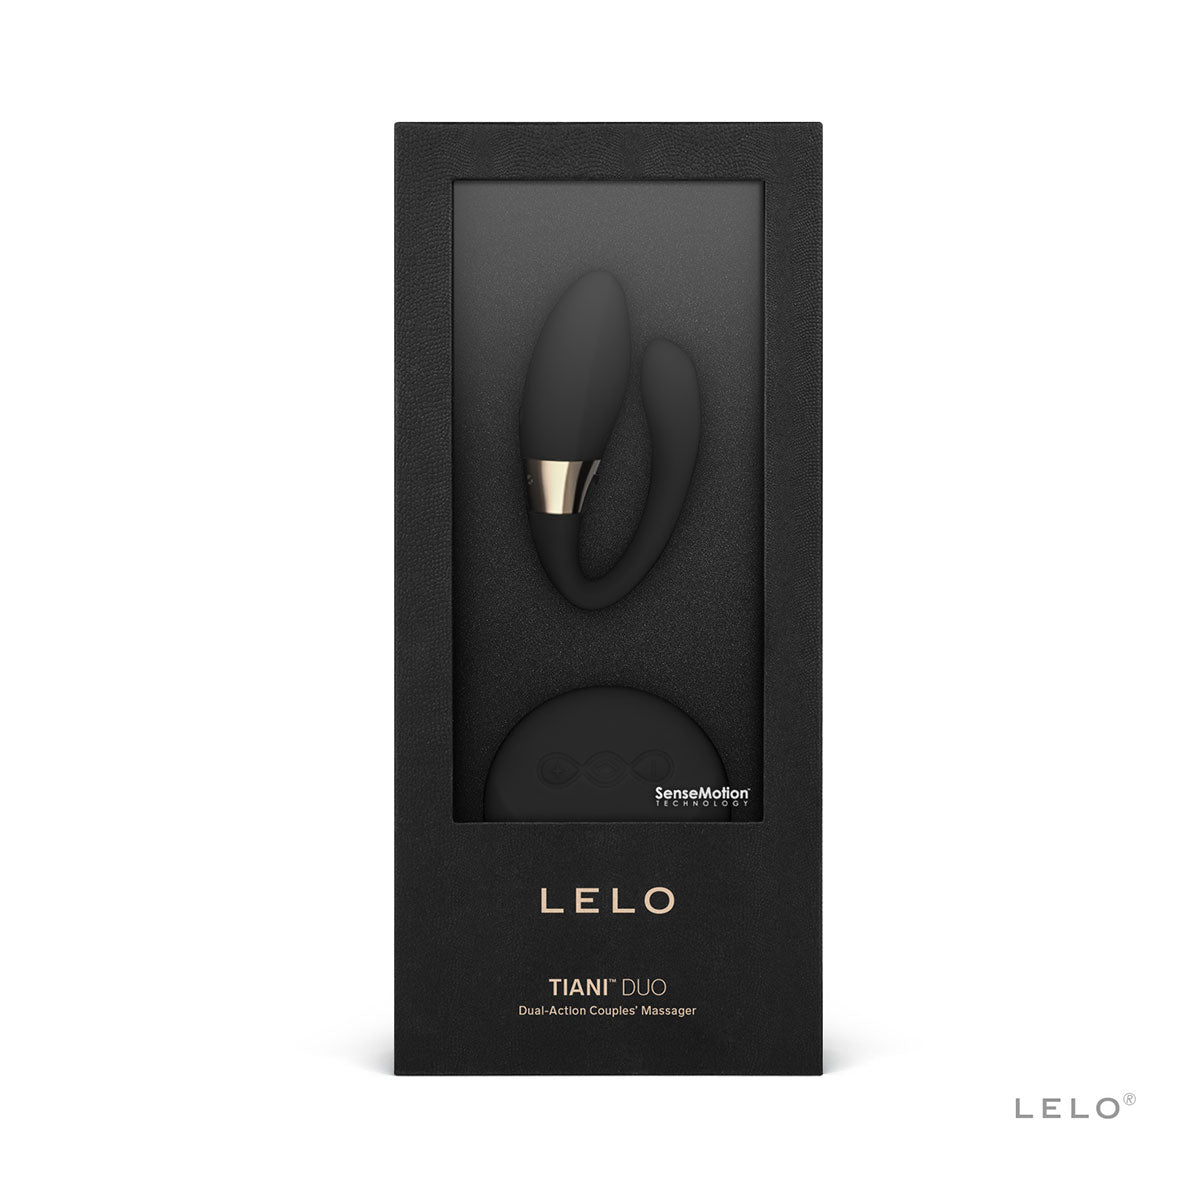 LELO Tiani Duo - Black Intimates Adult Boutique